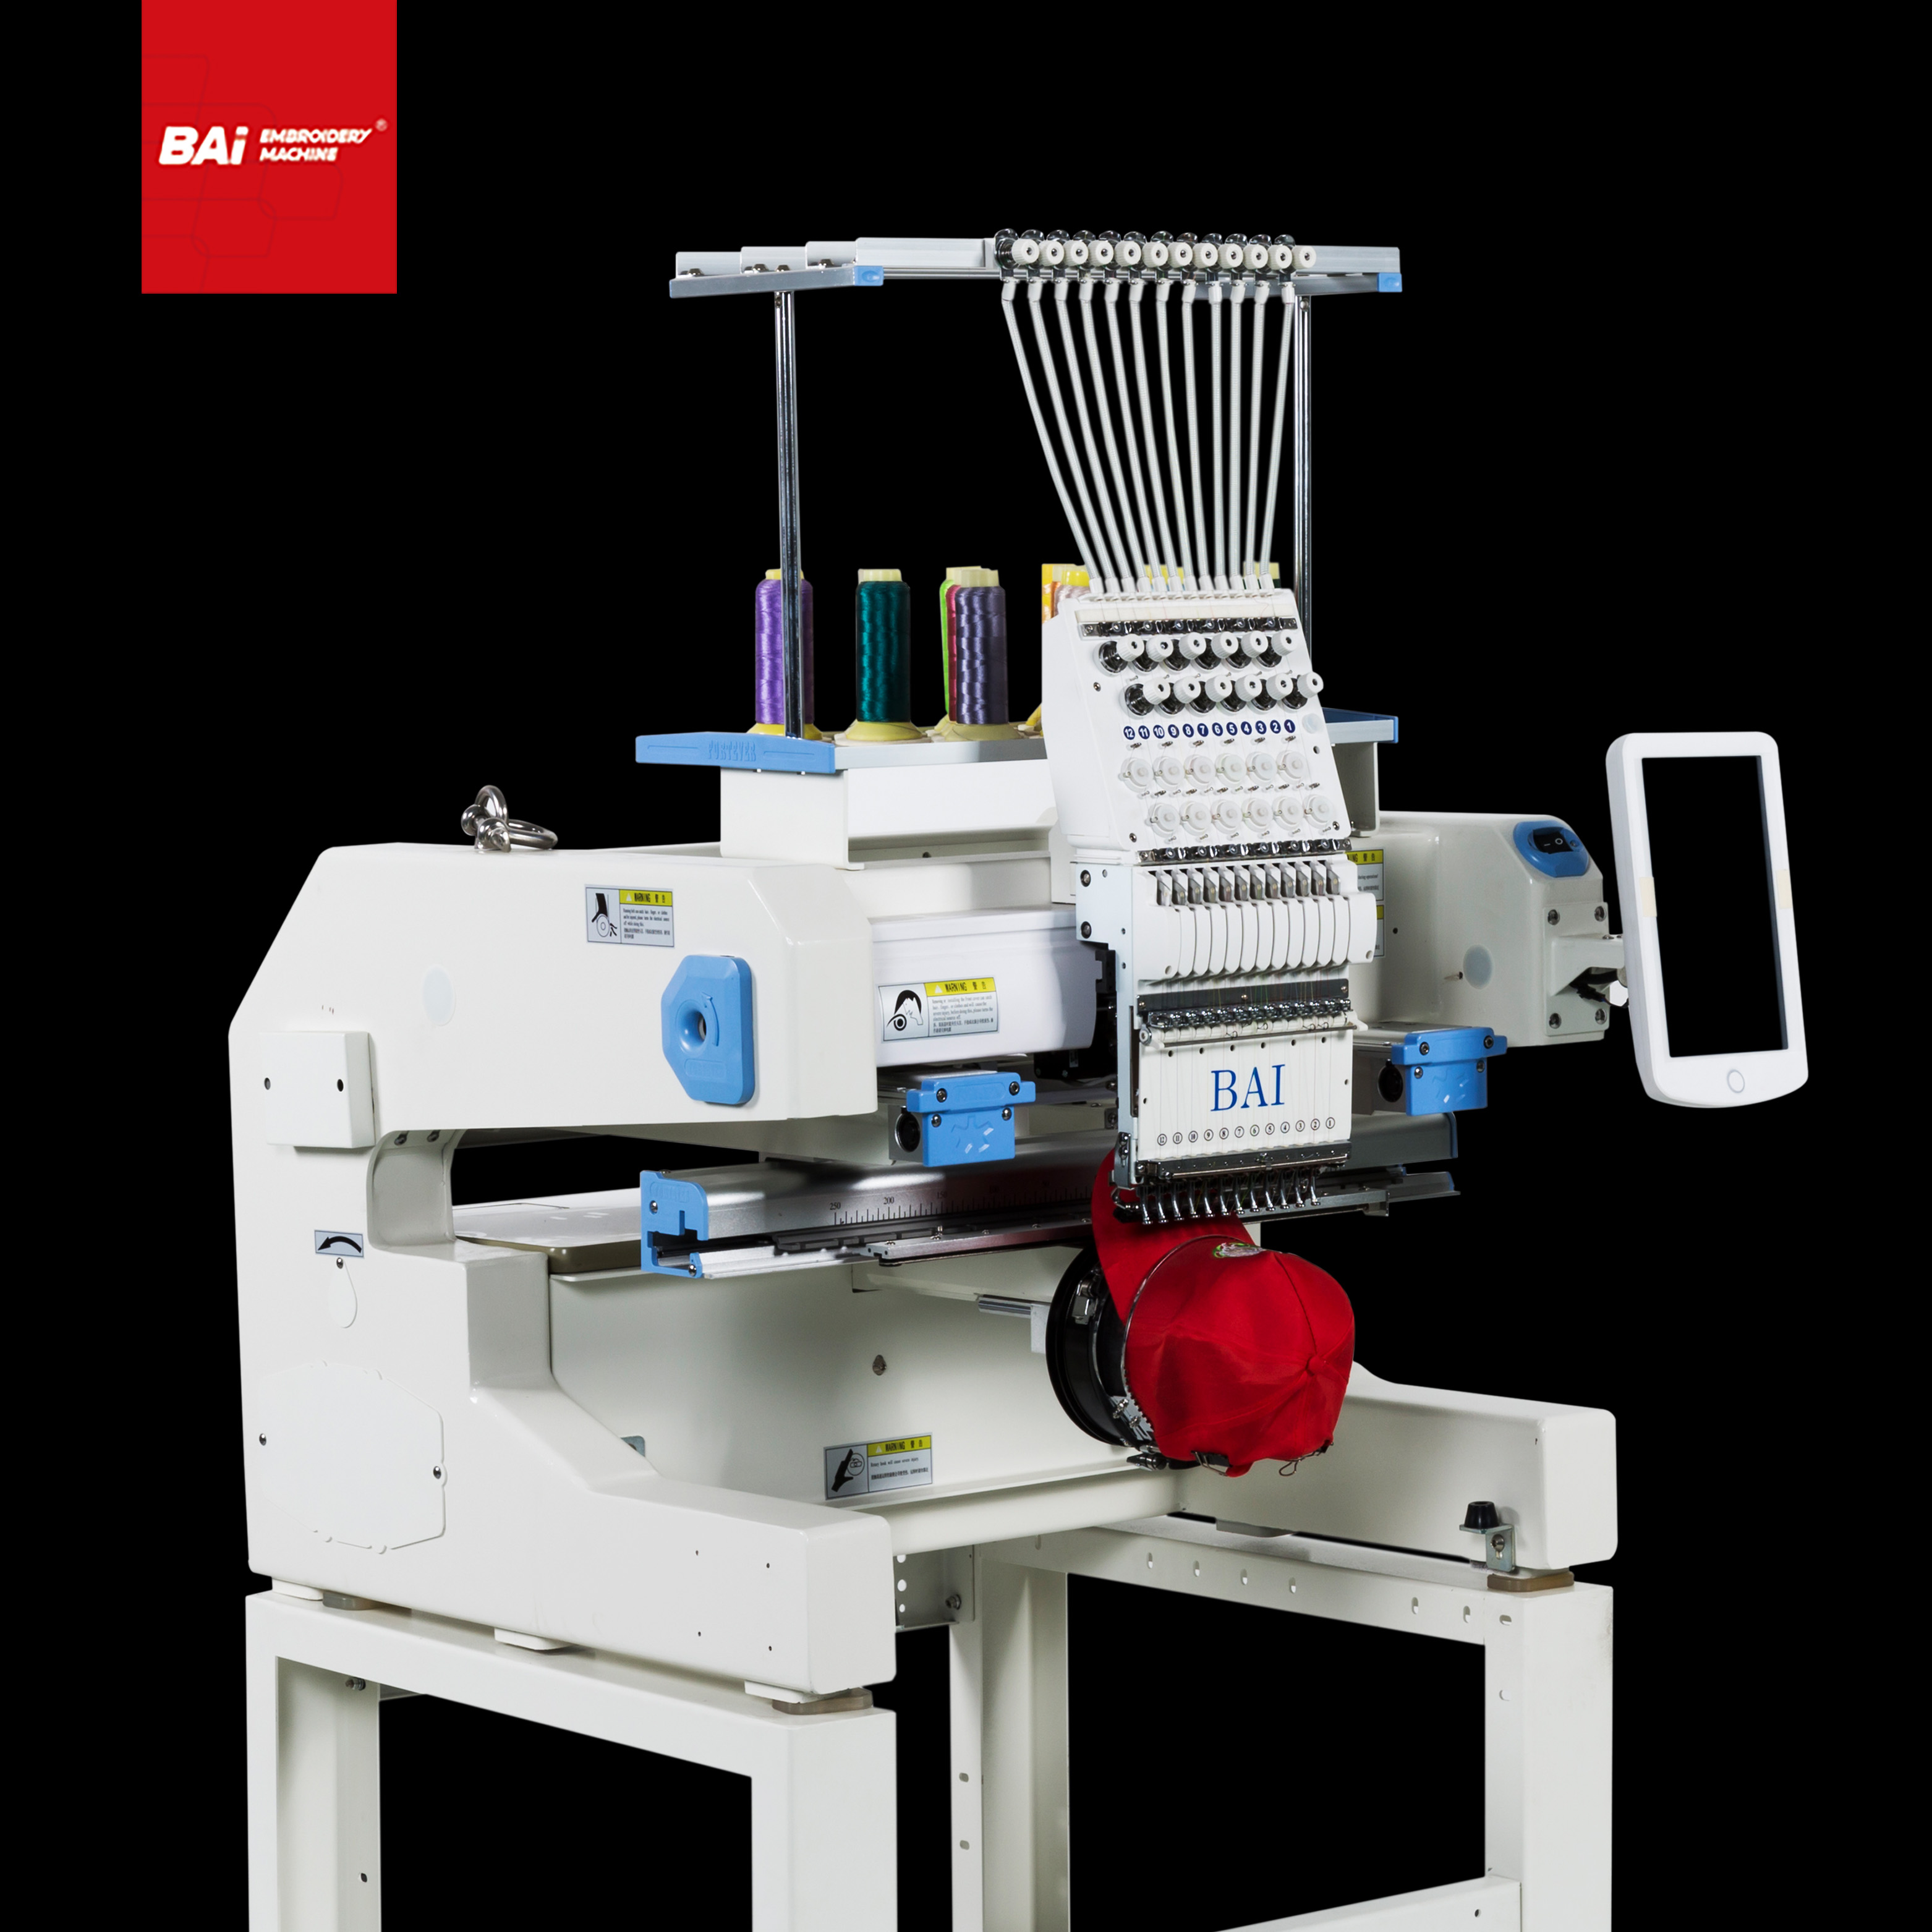 BAI High Speed Single Head Machine for Computer Embroidery Machine with Garment